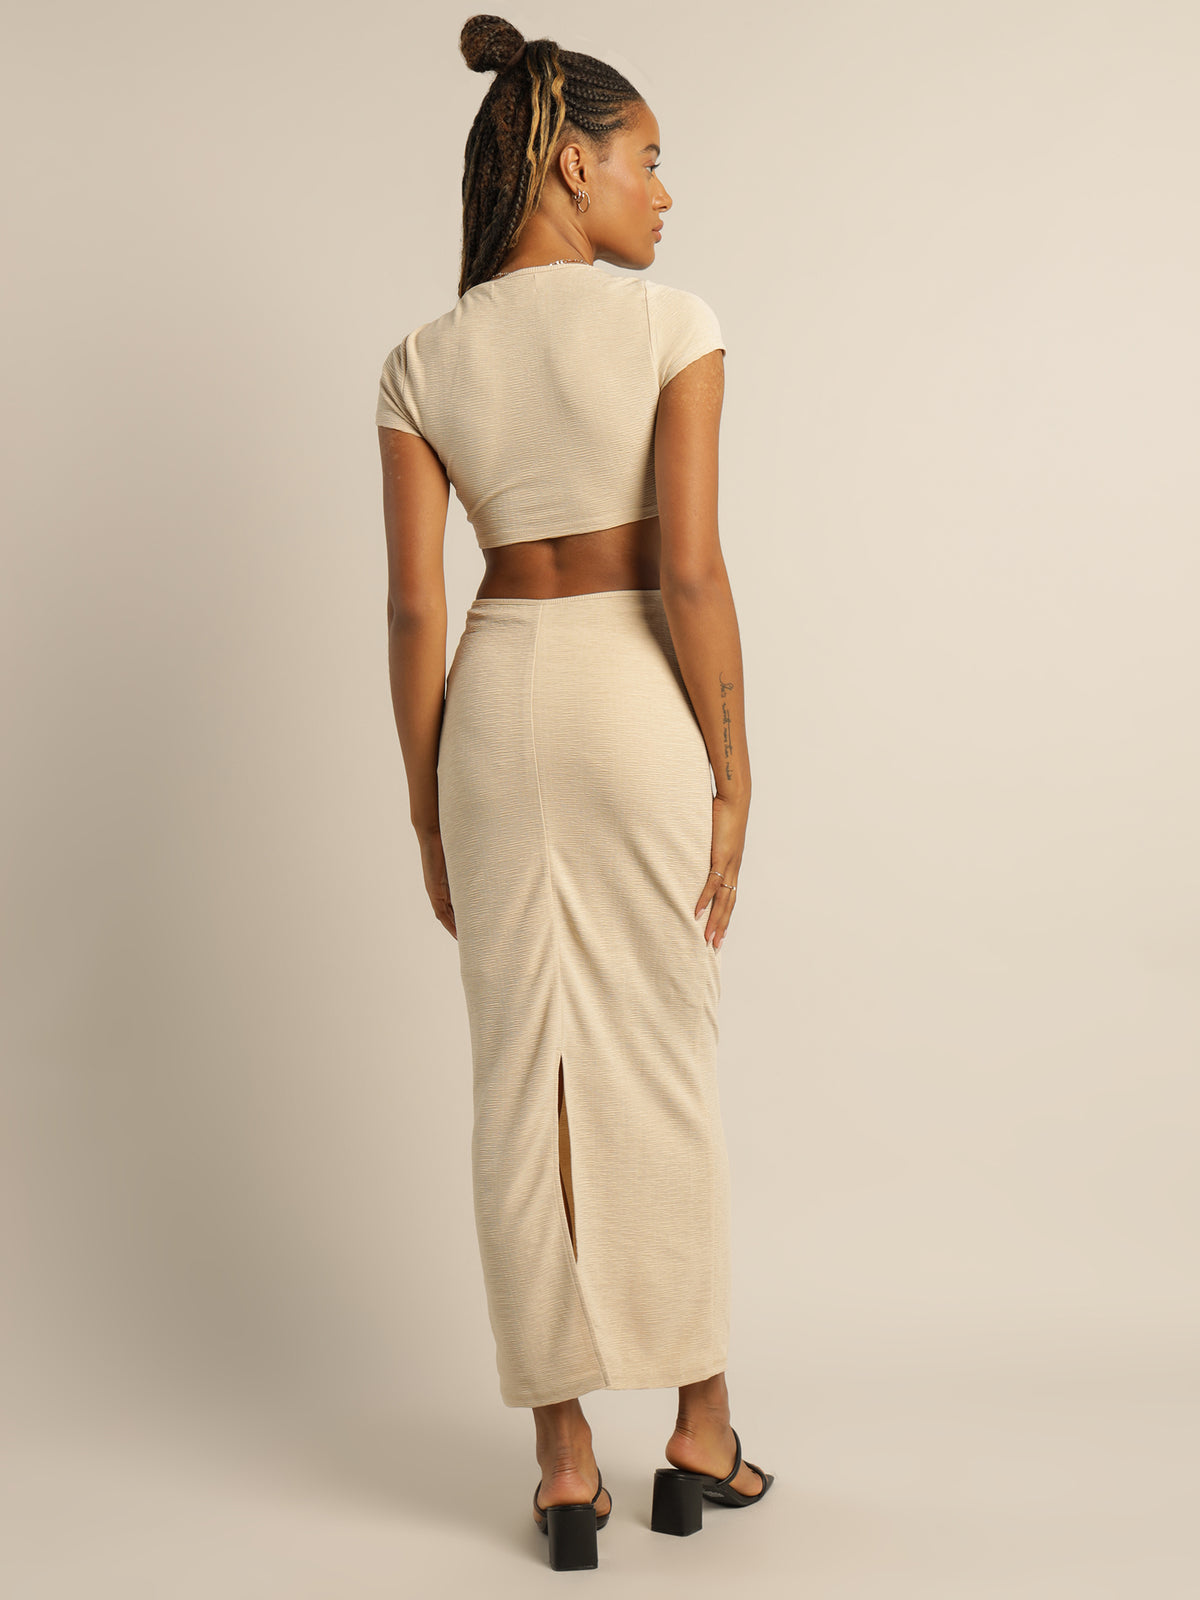 Farrah Dress in Ivory